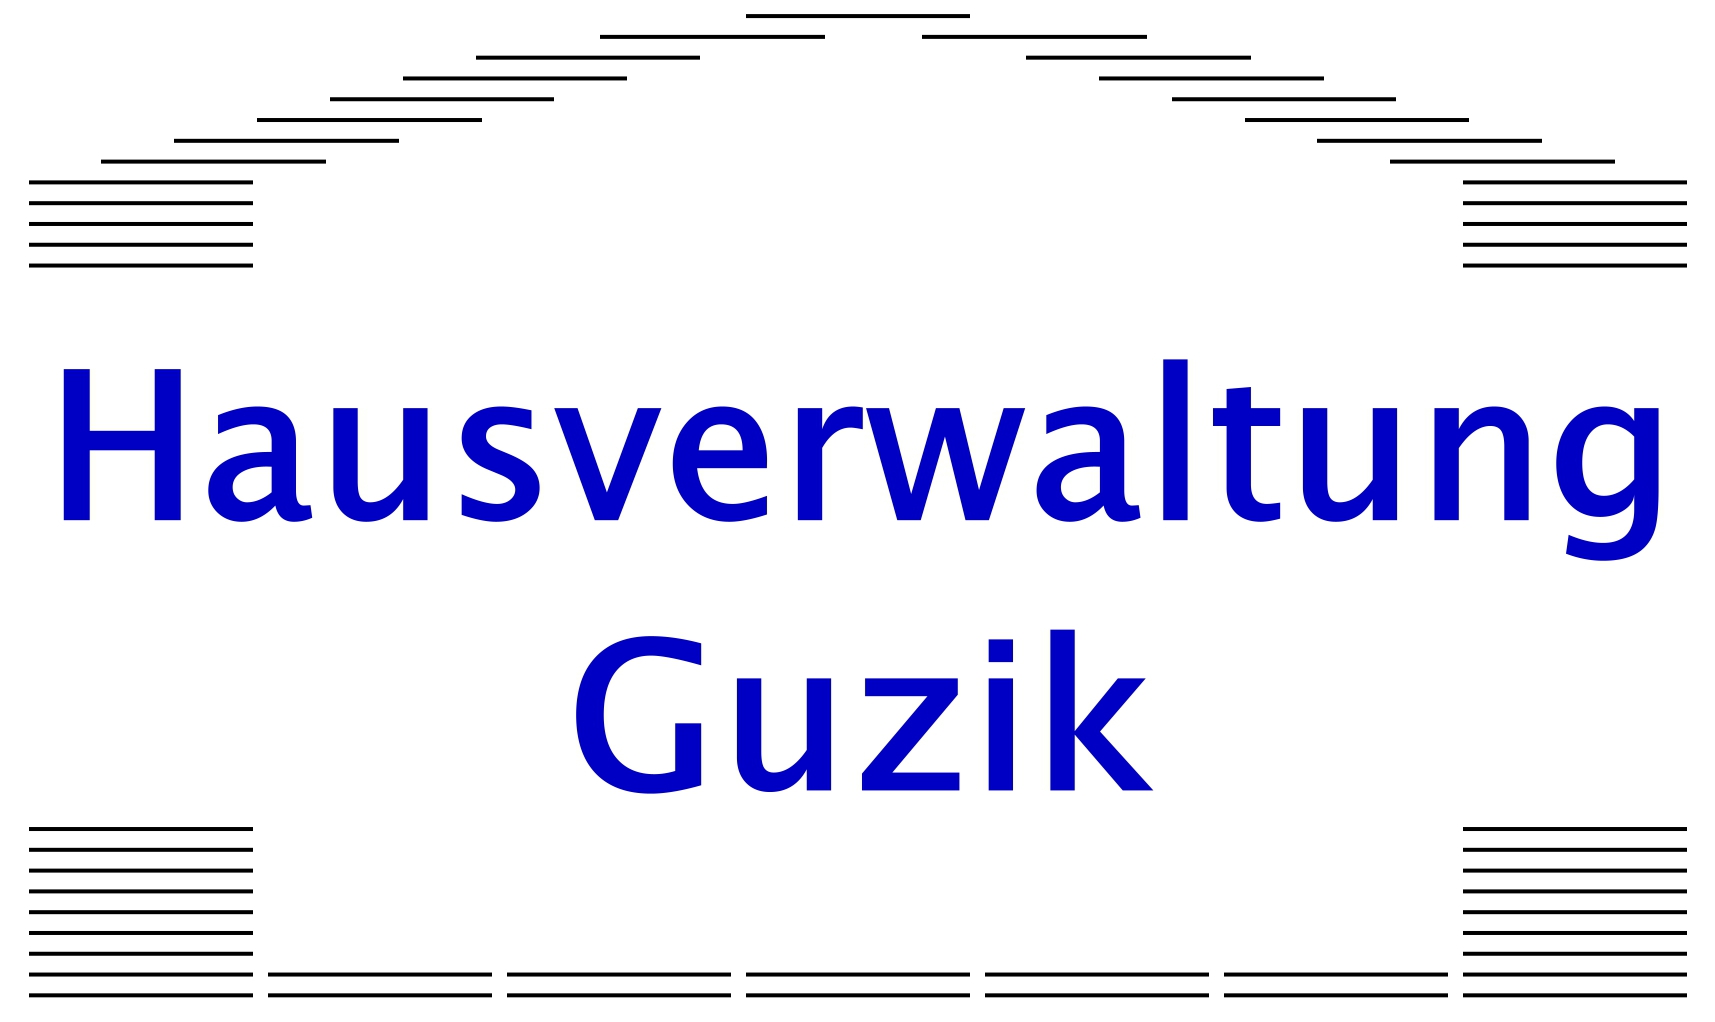 Hausverwaltung-Guzik logo